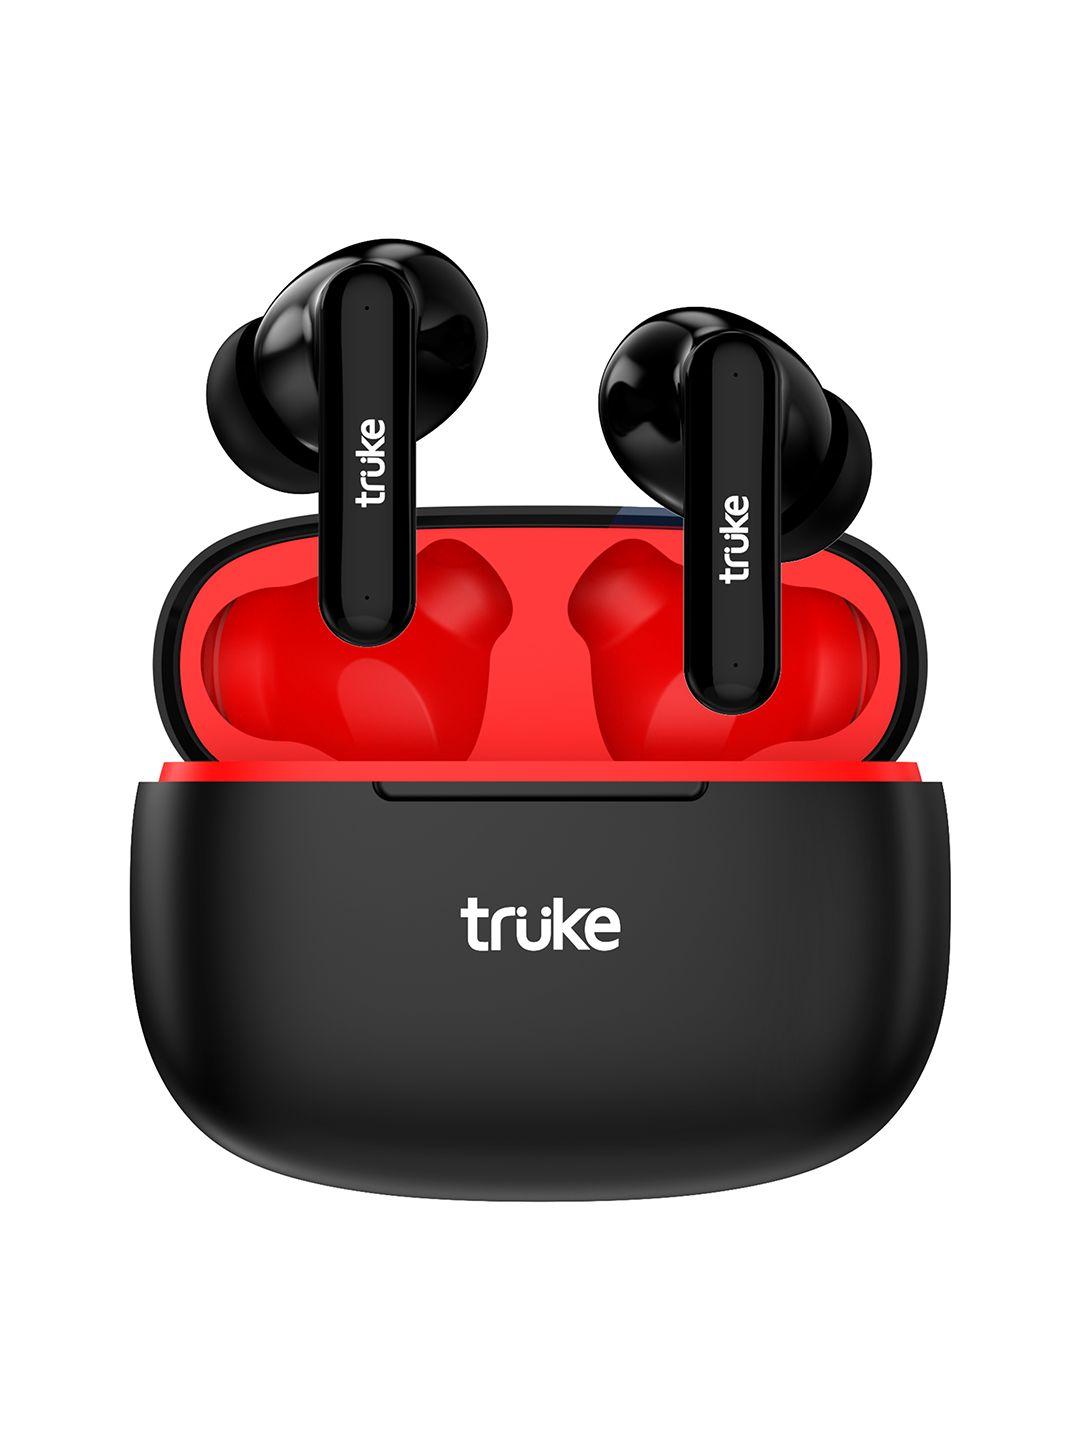 truke air buds true wireless earbuds - black